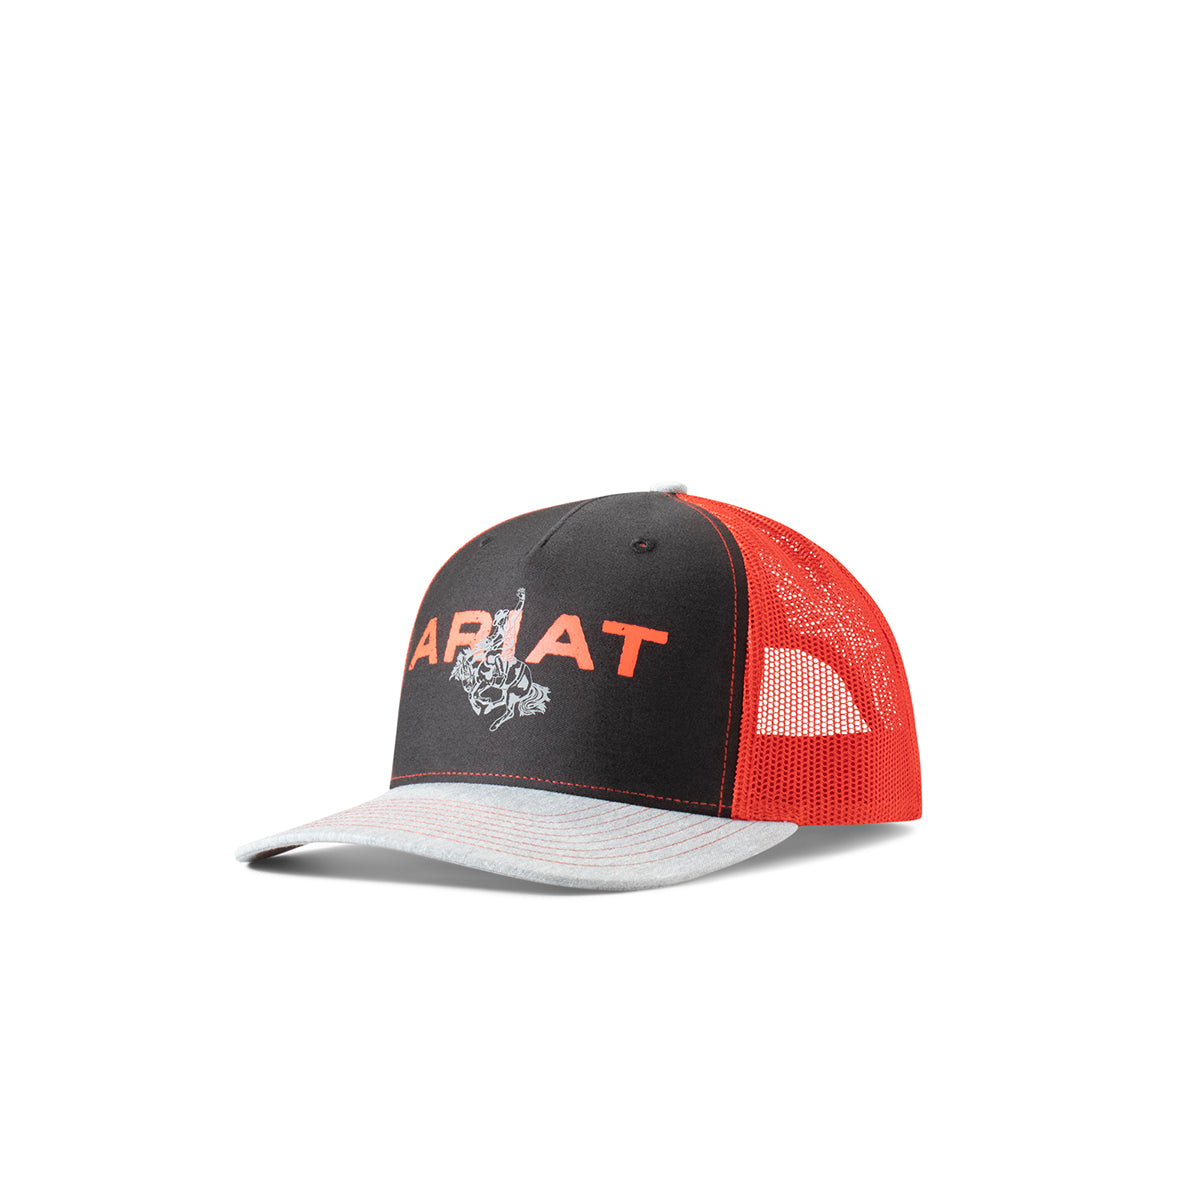 Ariat Men's Bucking Bronco Ball Cap - Black/Red